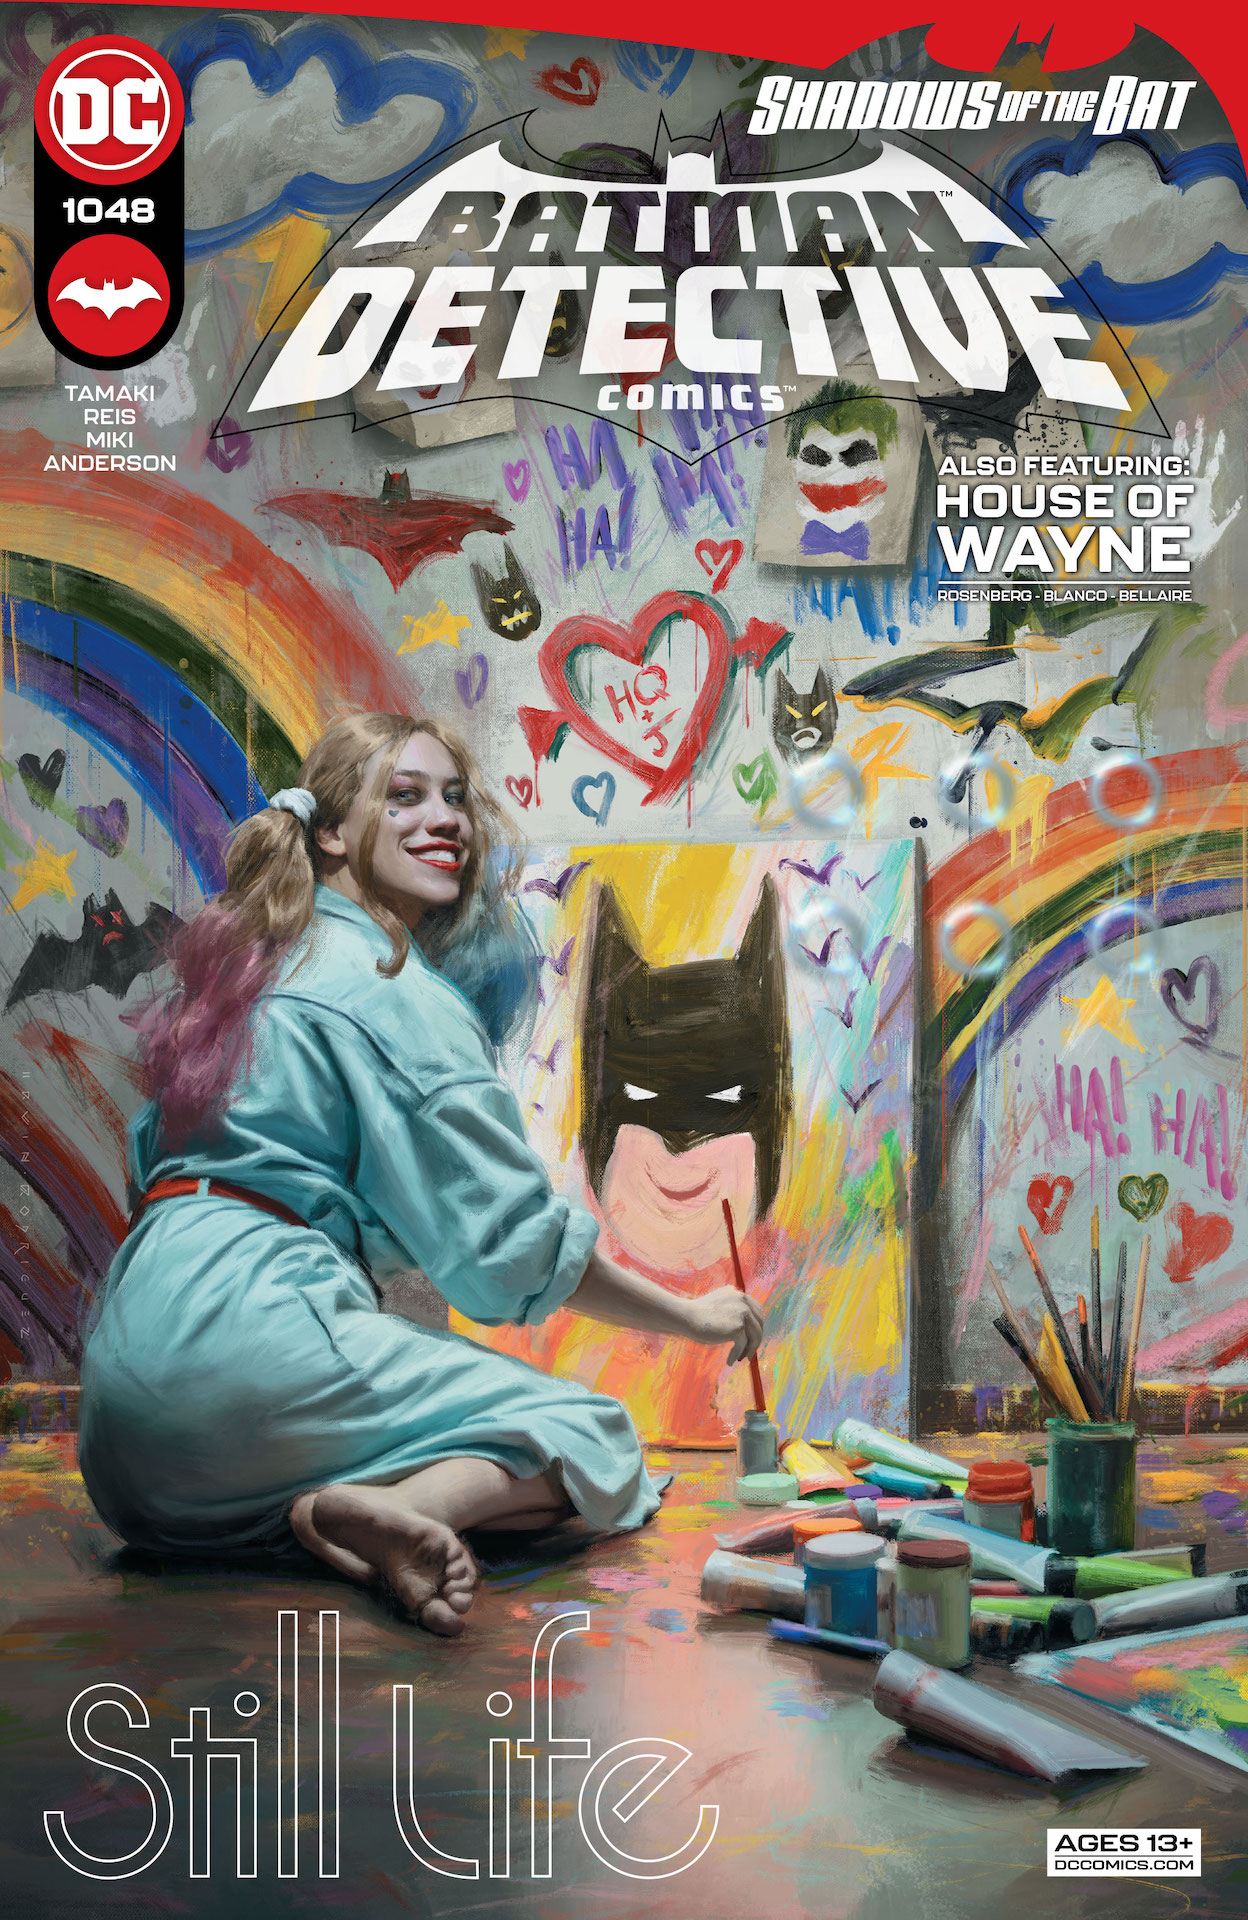 DC Preview: Detective Comics #1048